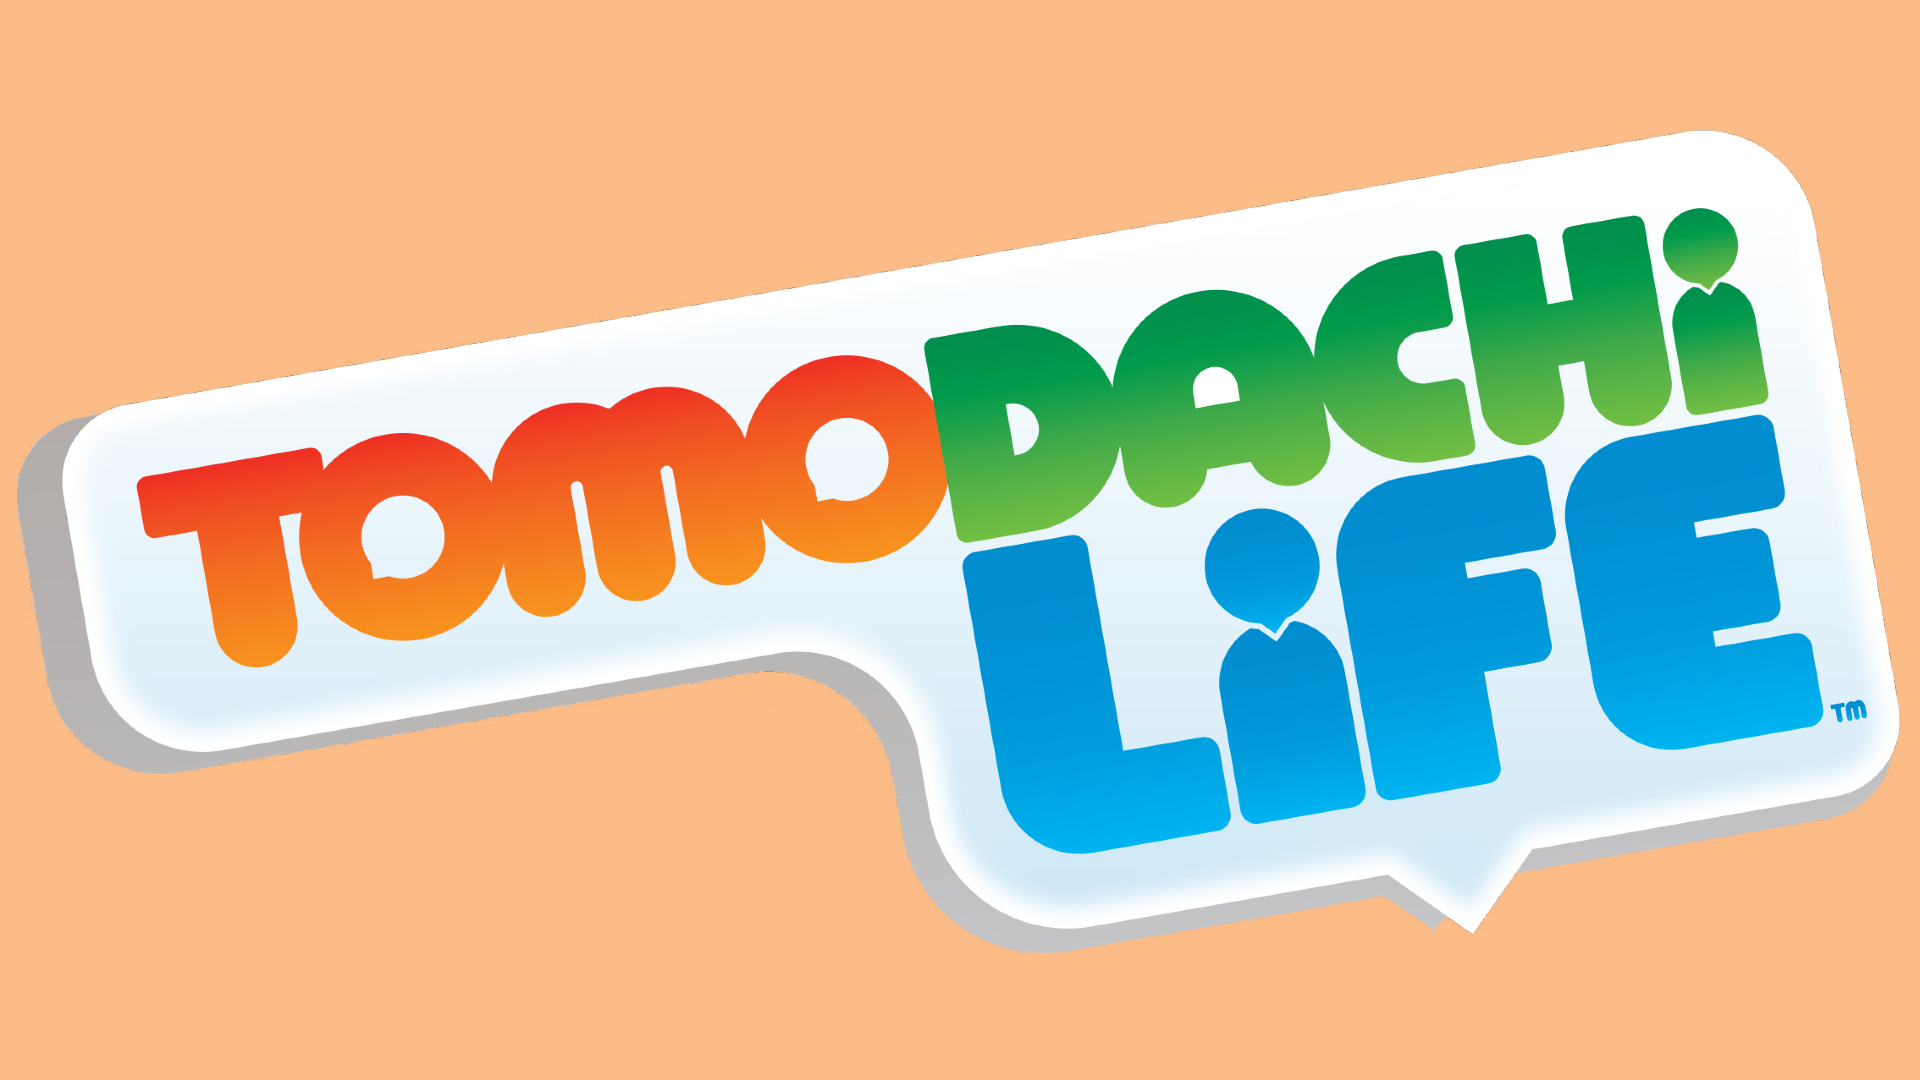 Tomodachi Life Logo